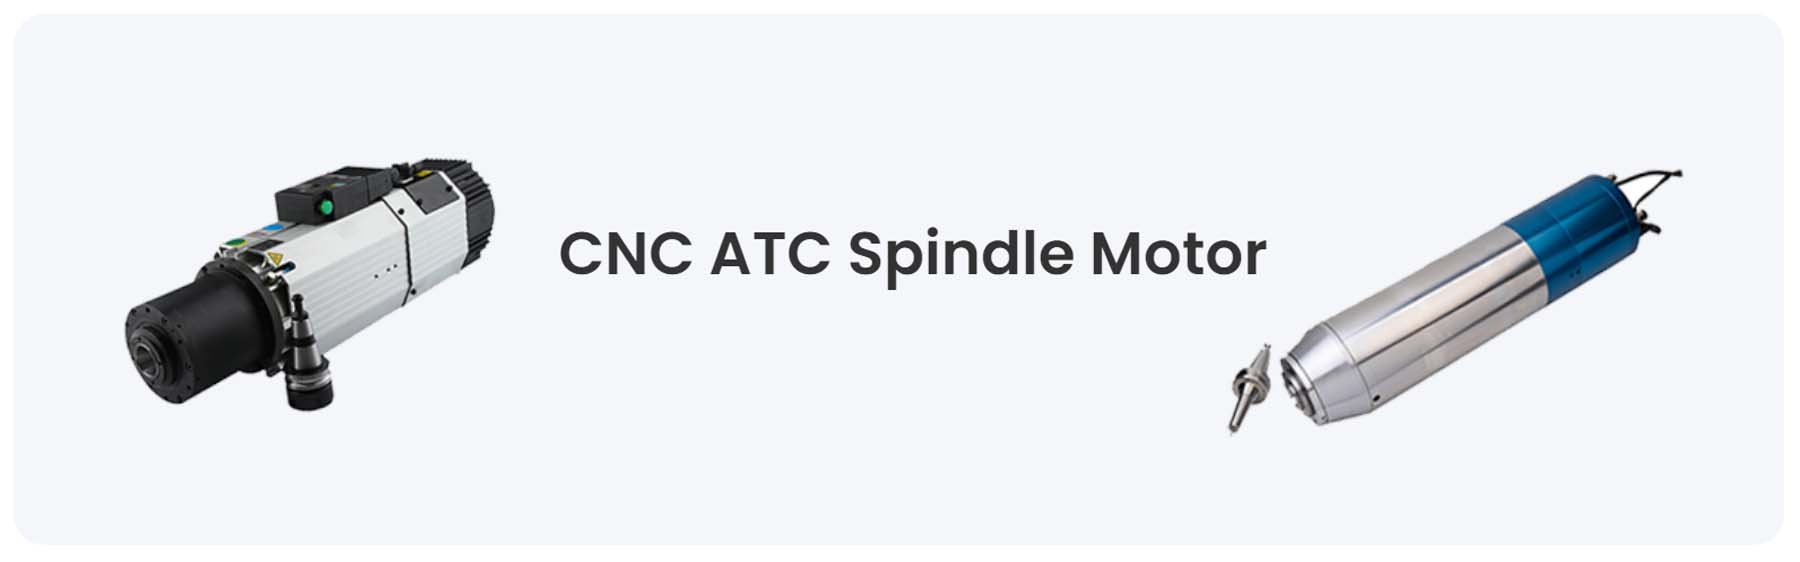 Motor Spindel CNC ATC - HOLRY Motor.jpg